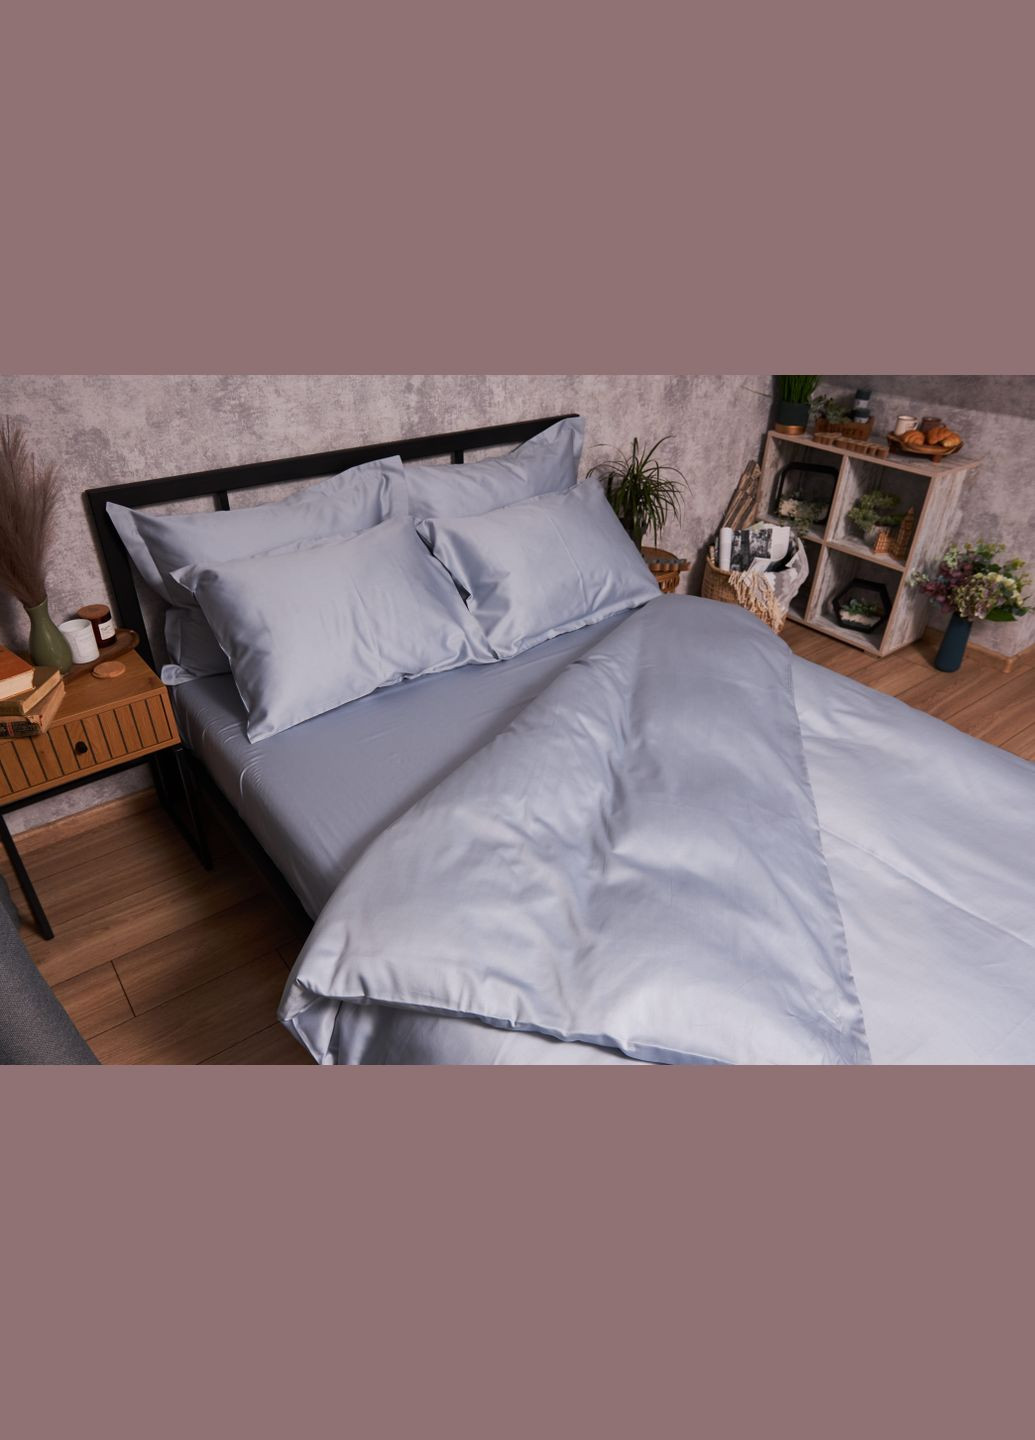 Комплект постельного белья Satin Premium полуторный евро 160х220 наволочки 2х70х70 (MS-820003872) Moon&Star skyline (288043935)